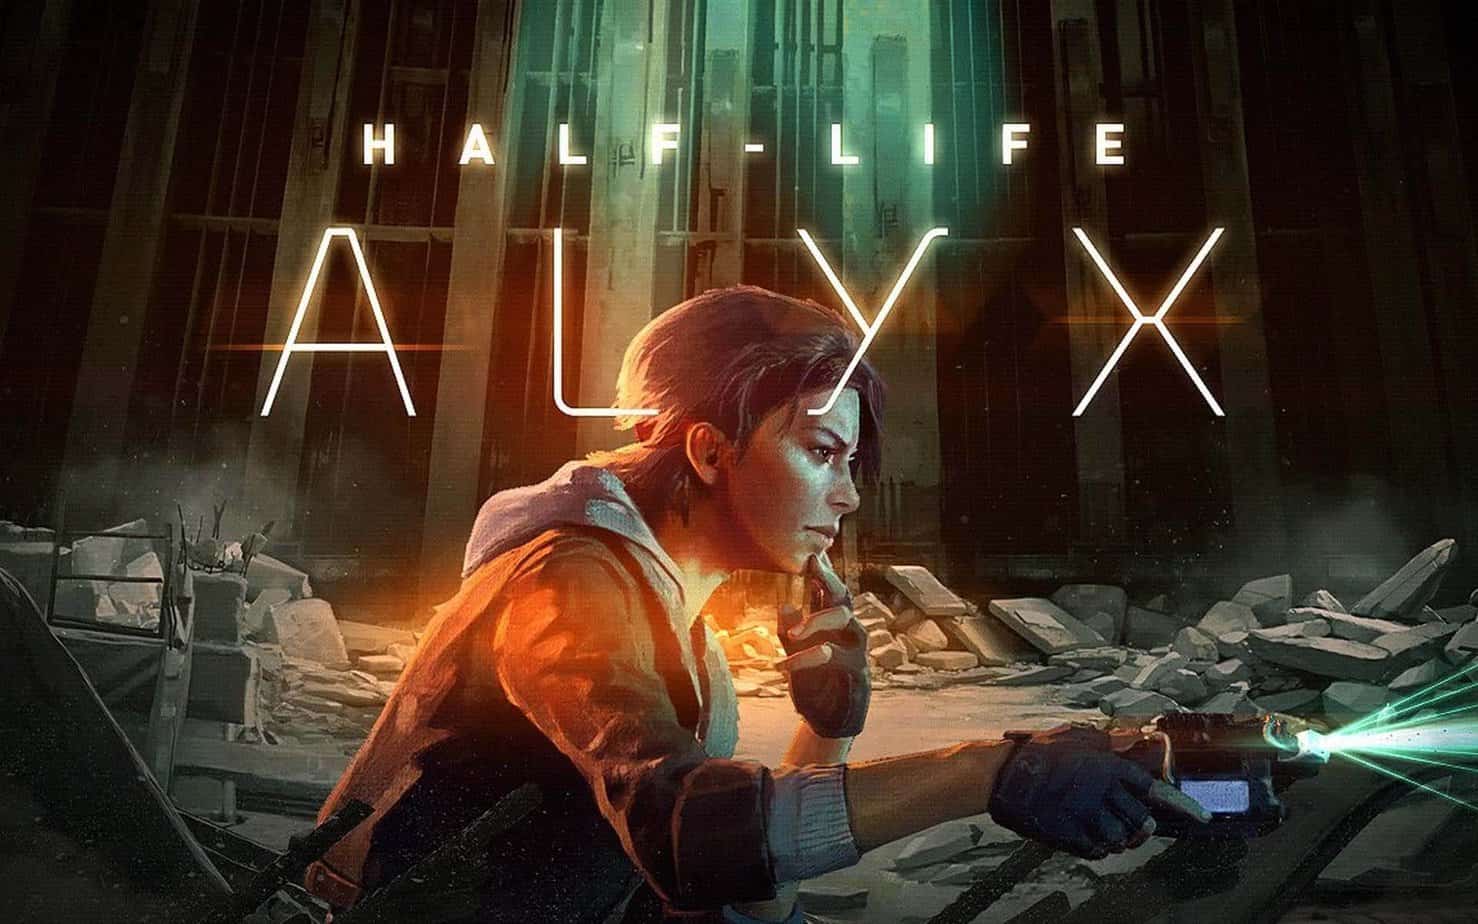 HALF LIFE ALYX - Internet and Critics find common ground in Valve's latest Masterpiece